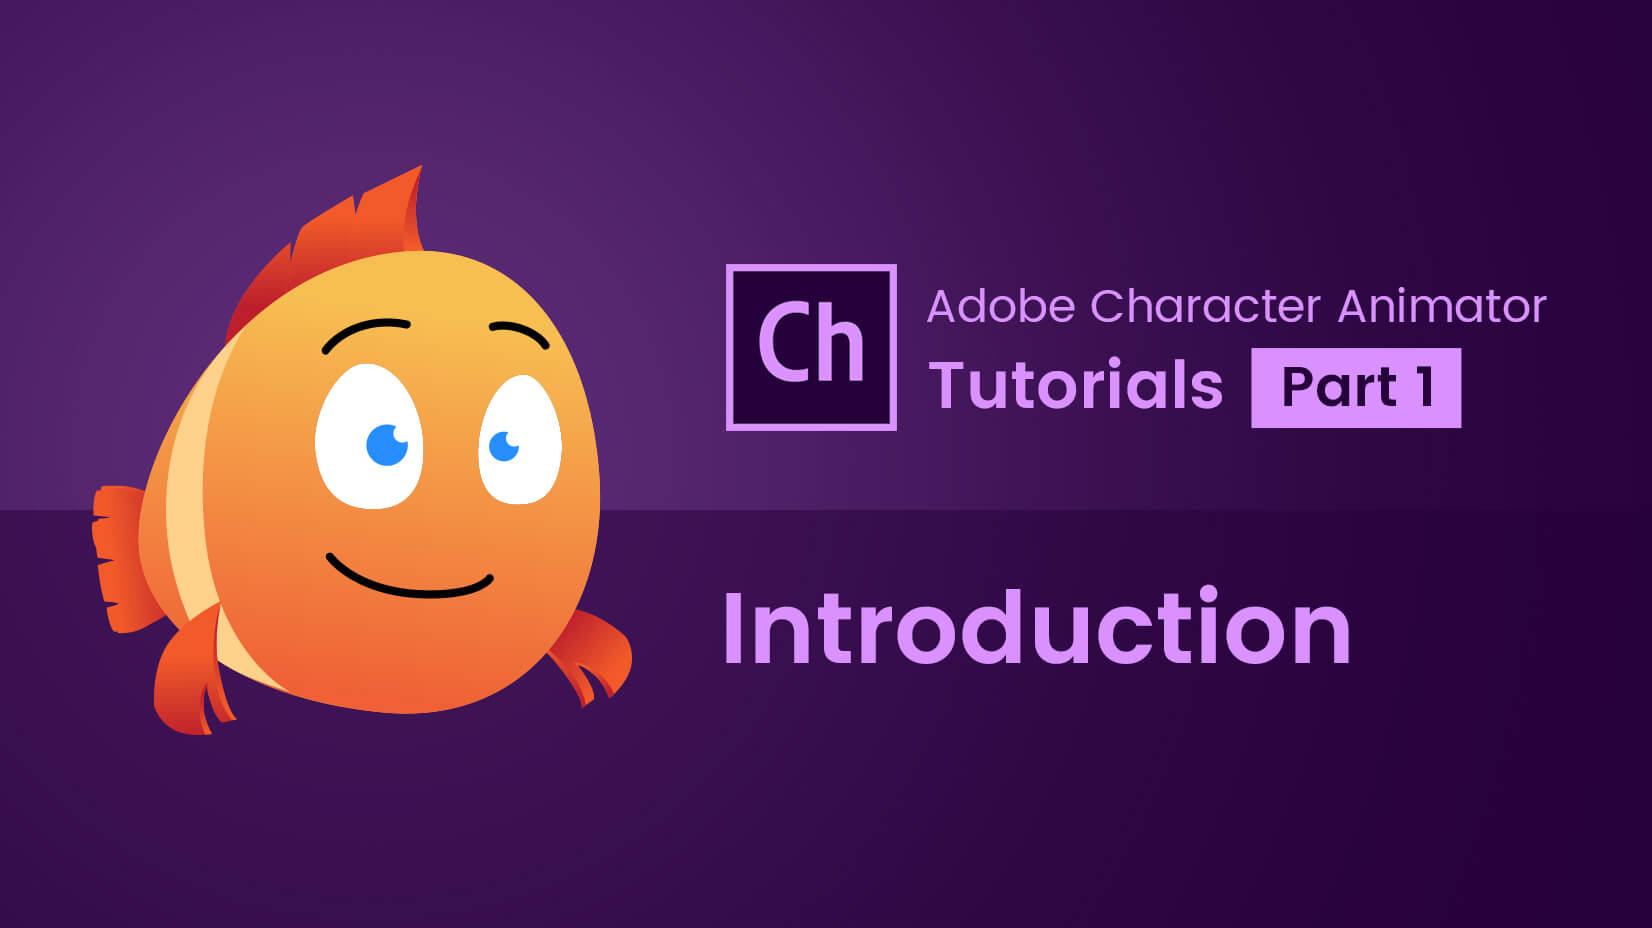 Adobe Character Animator Tutorials